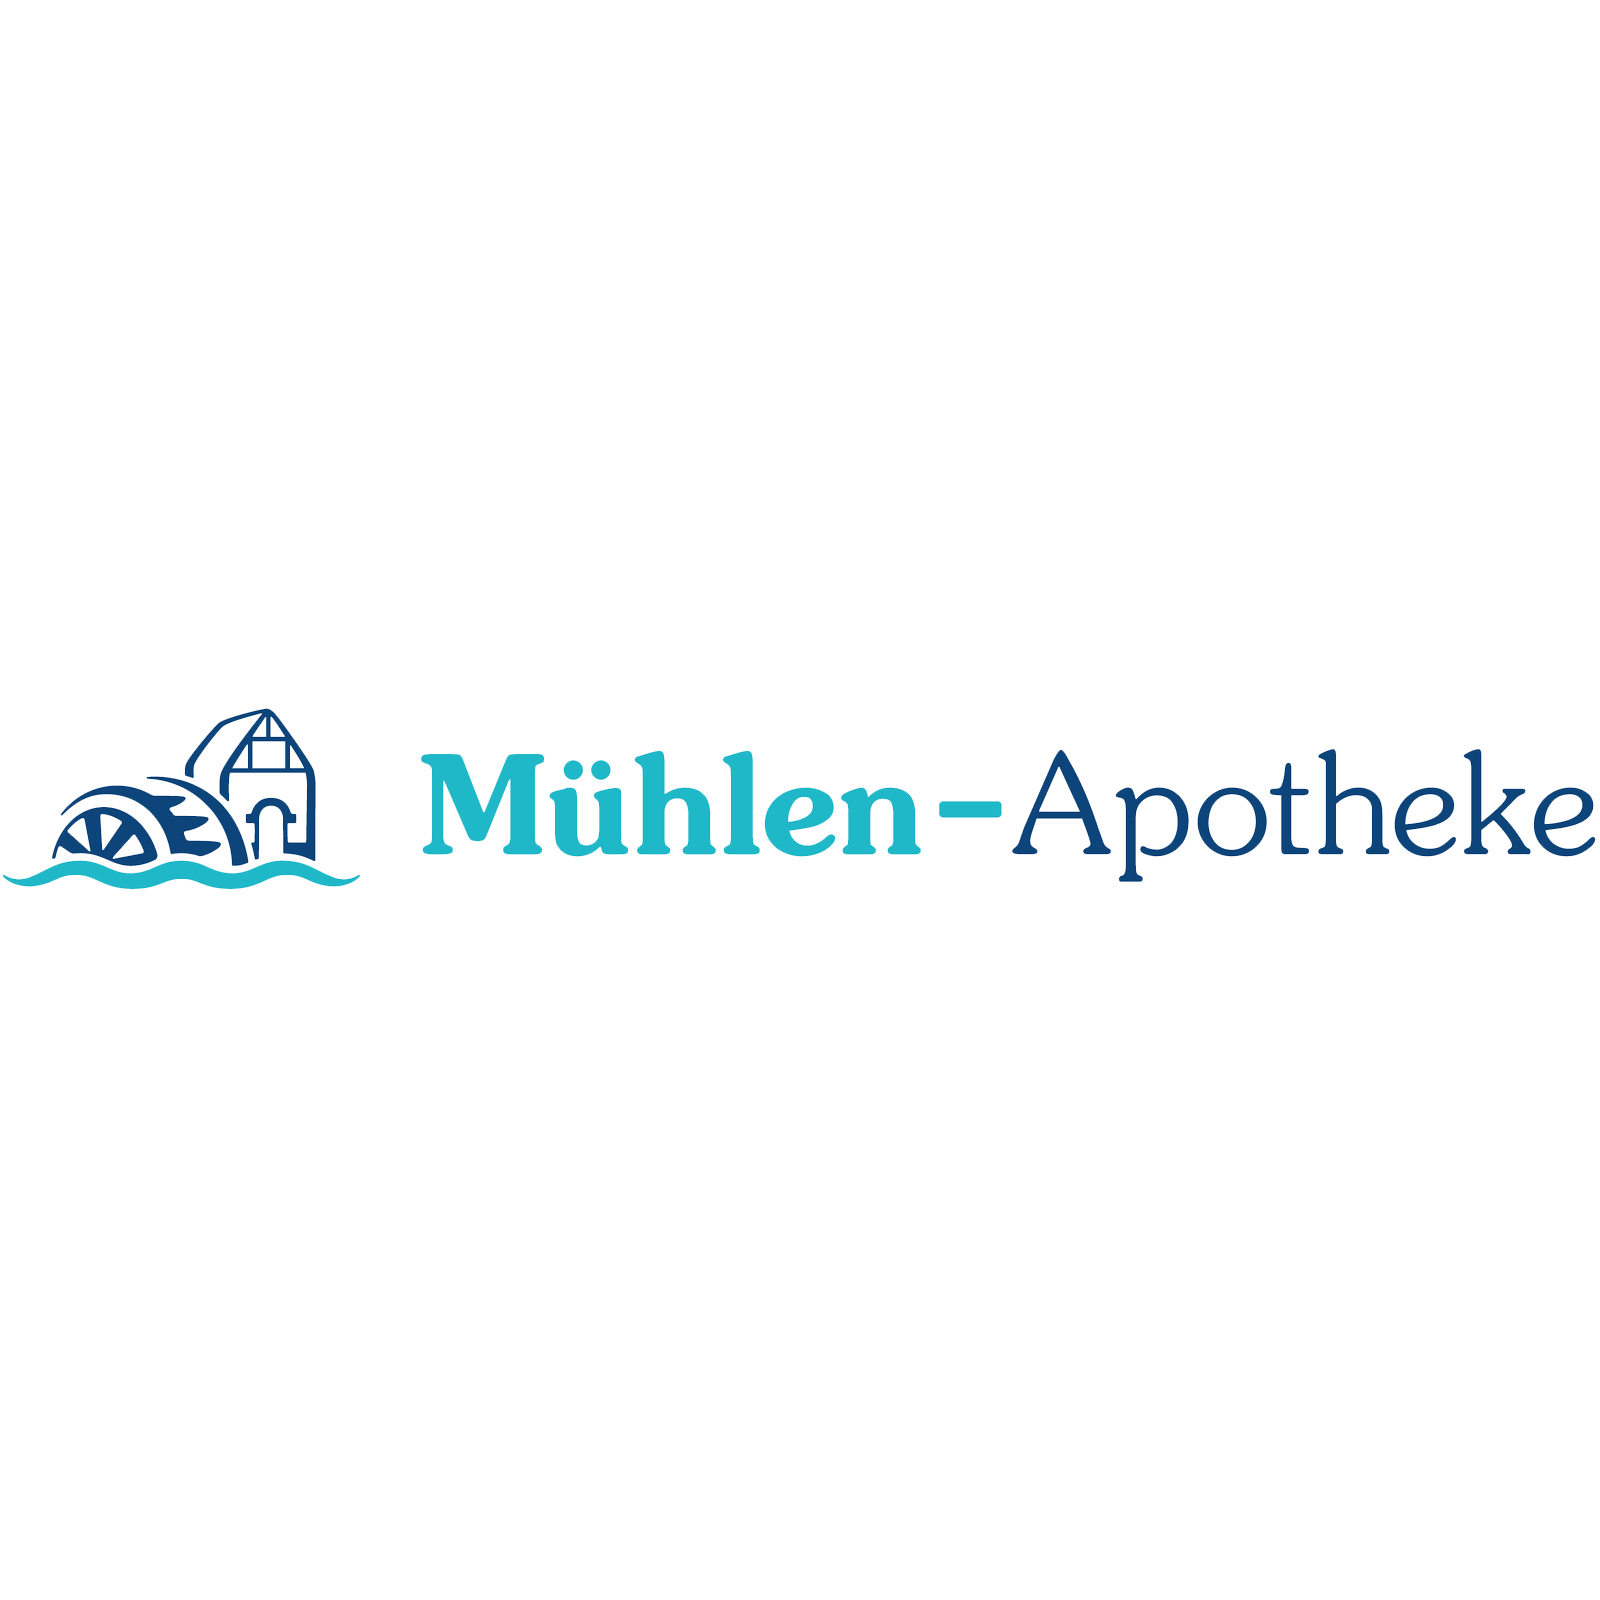 Mühlen-Apotheke in Gifhorn - Logo